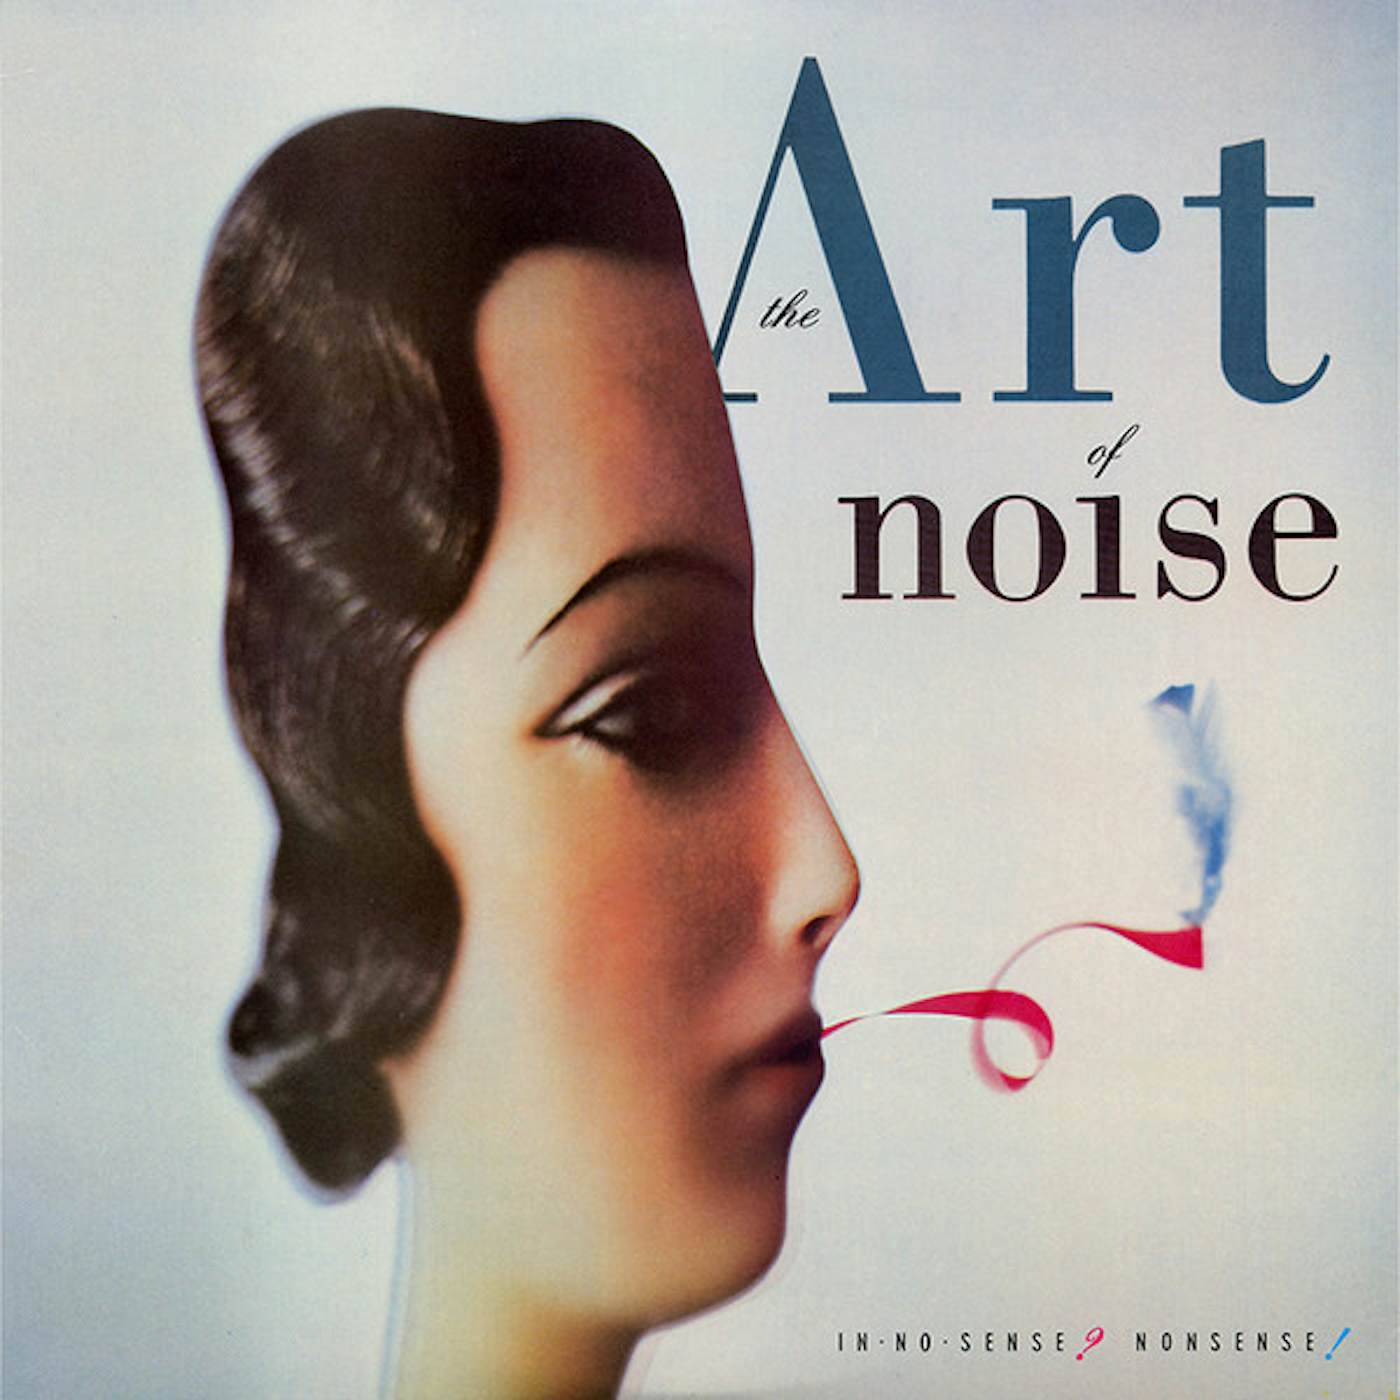 The Art Of Noise In No Sense? Nonsense! Vinyl Record